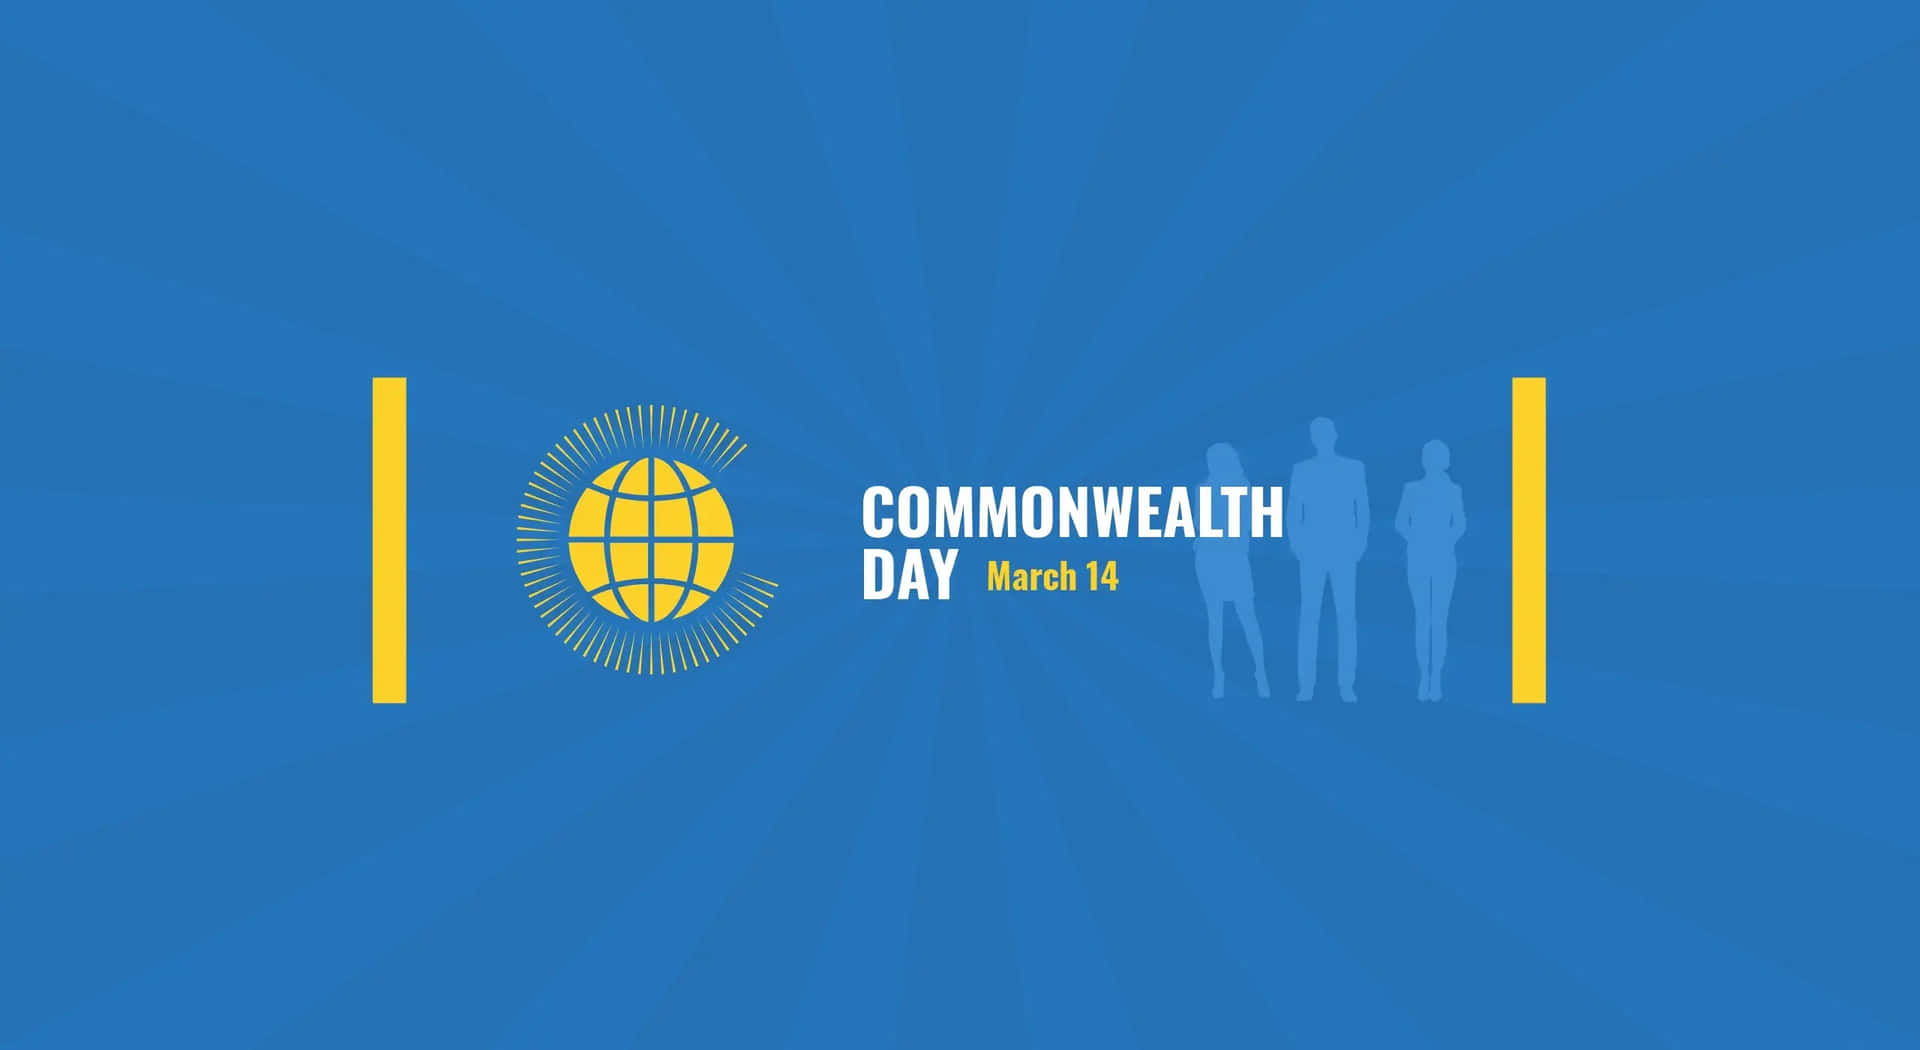 Celebrate Commonwealth Day - Unity Through Diversity" Wallpaper